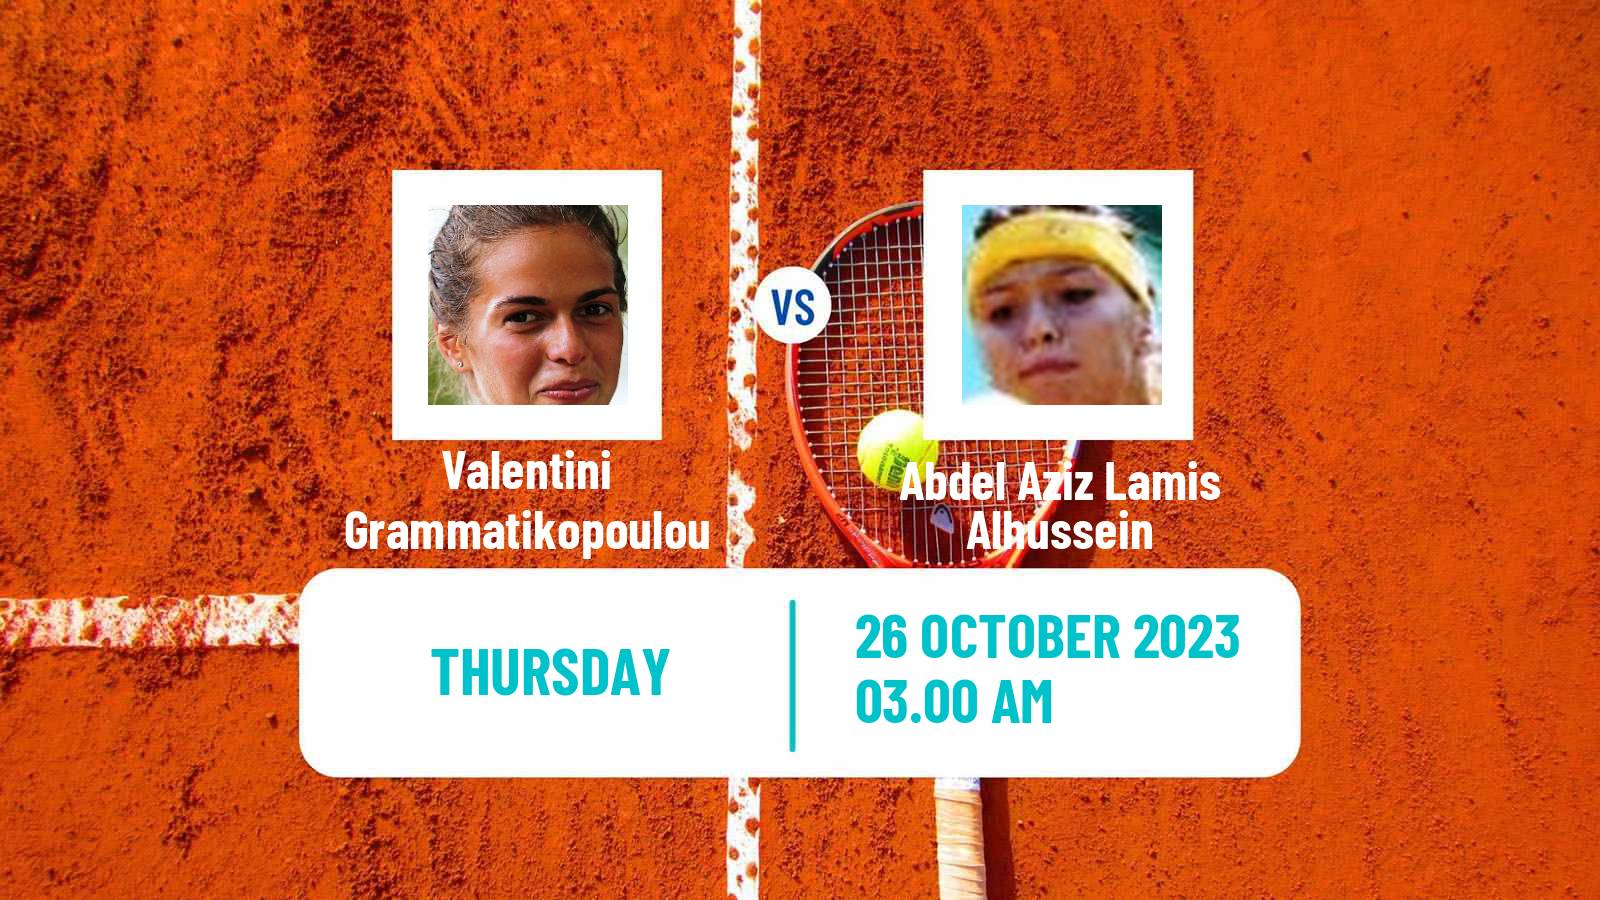 Tennis ITF W25 Sharm Elsheikh 3 Women Valentini Grammatikopoulou - Abdel Aziz Lamis Alhussein